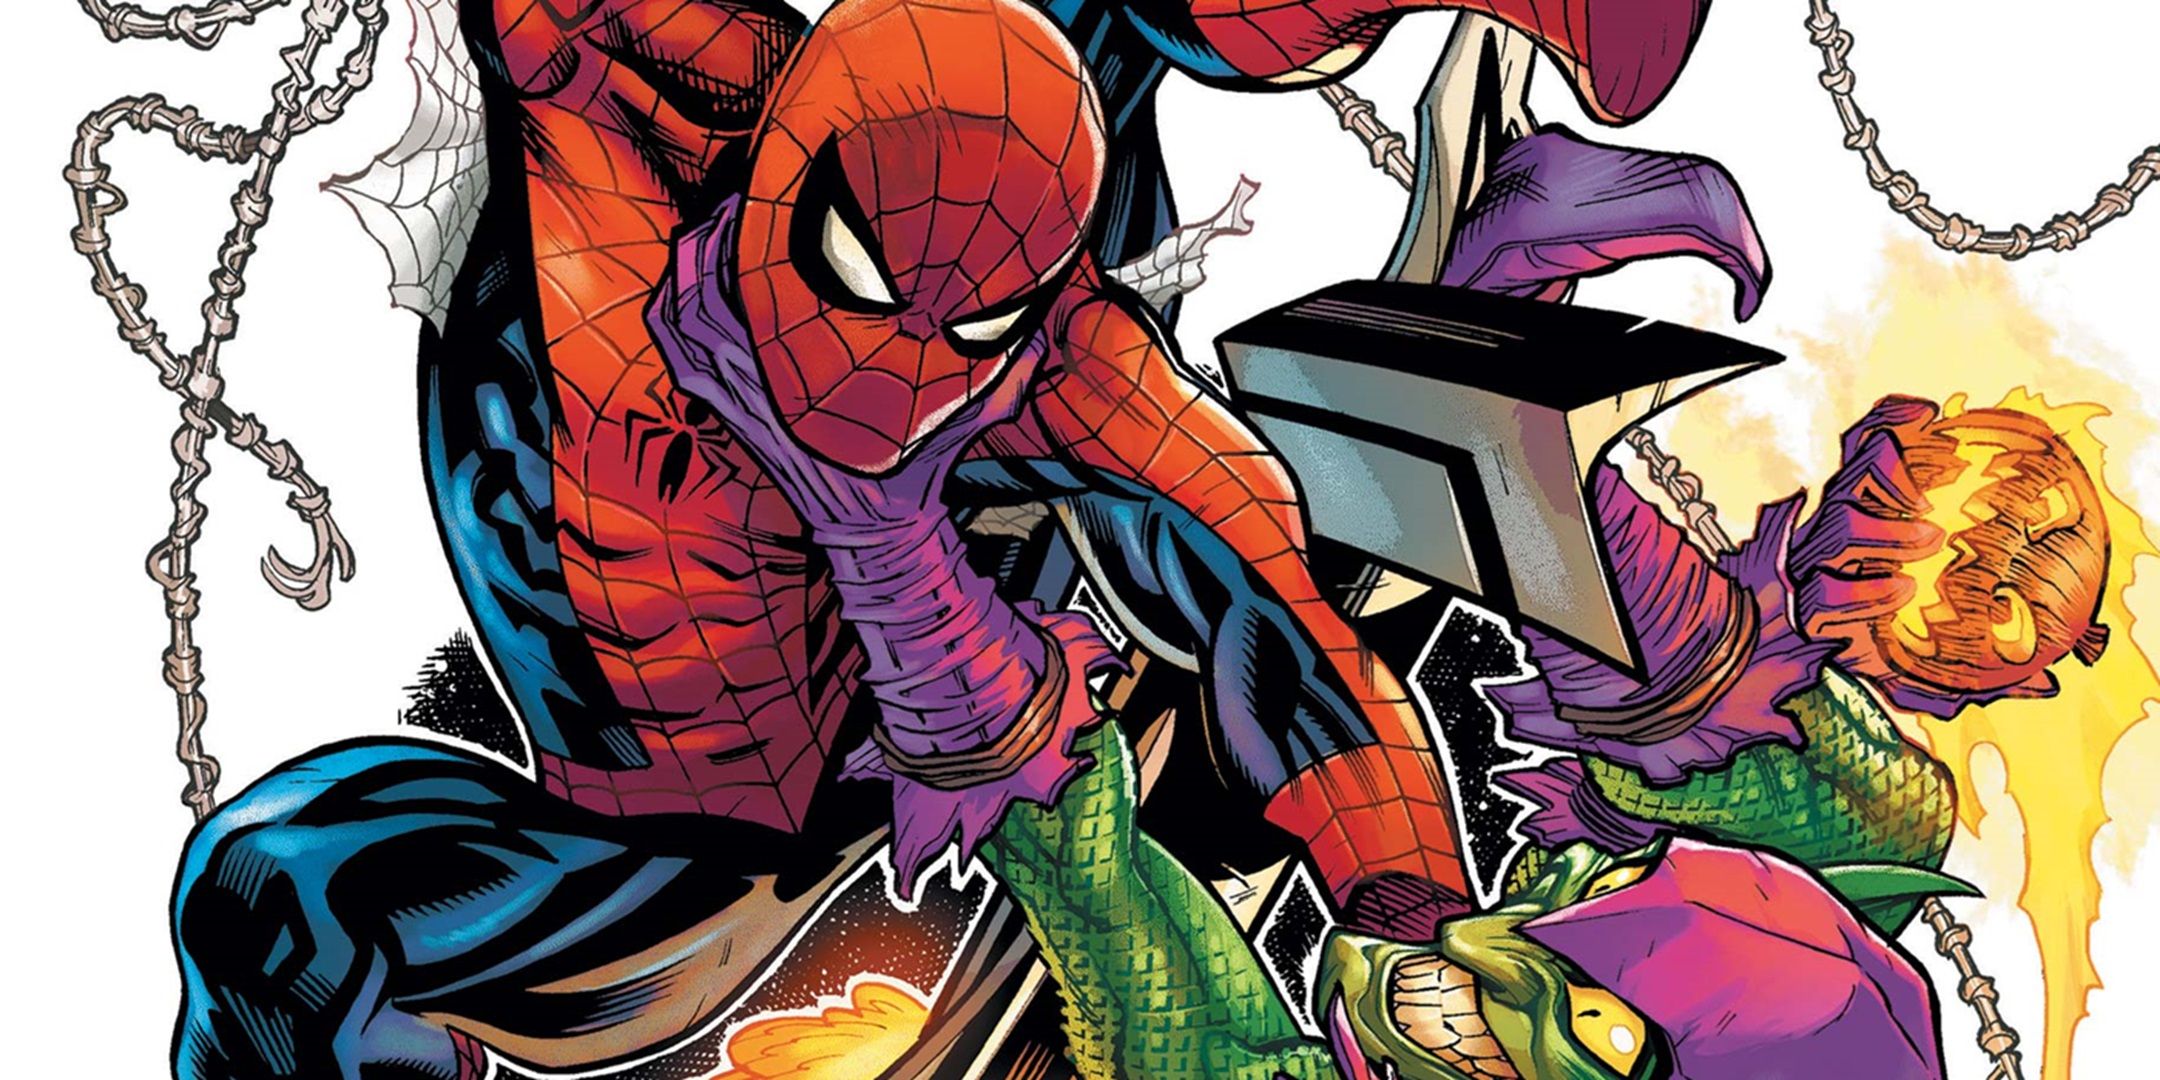 Spider-Man fighting Green Goblin